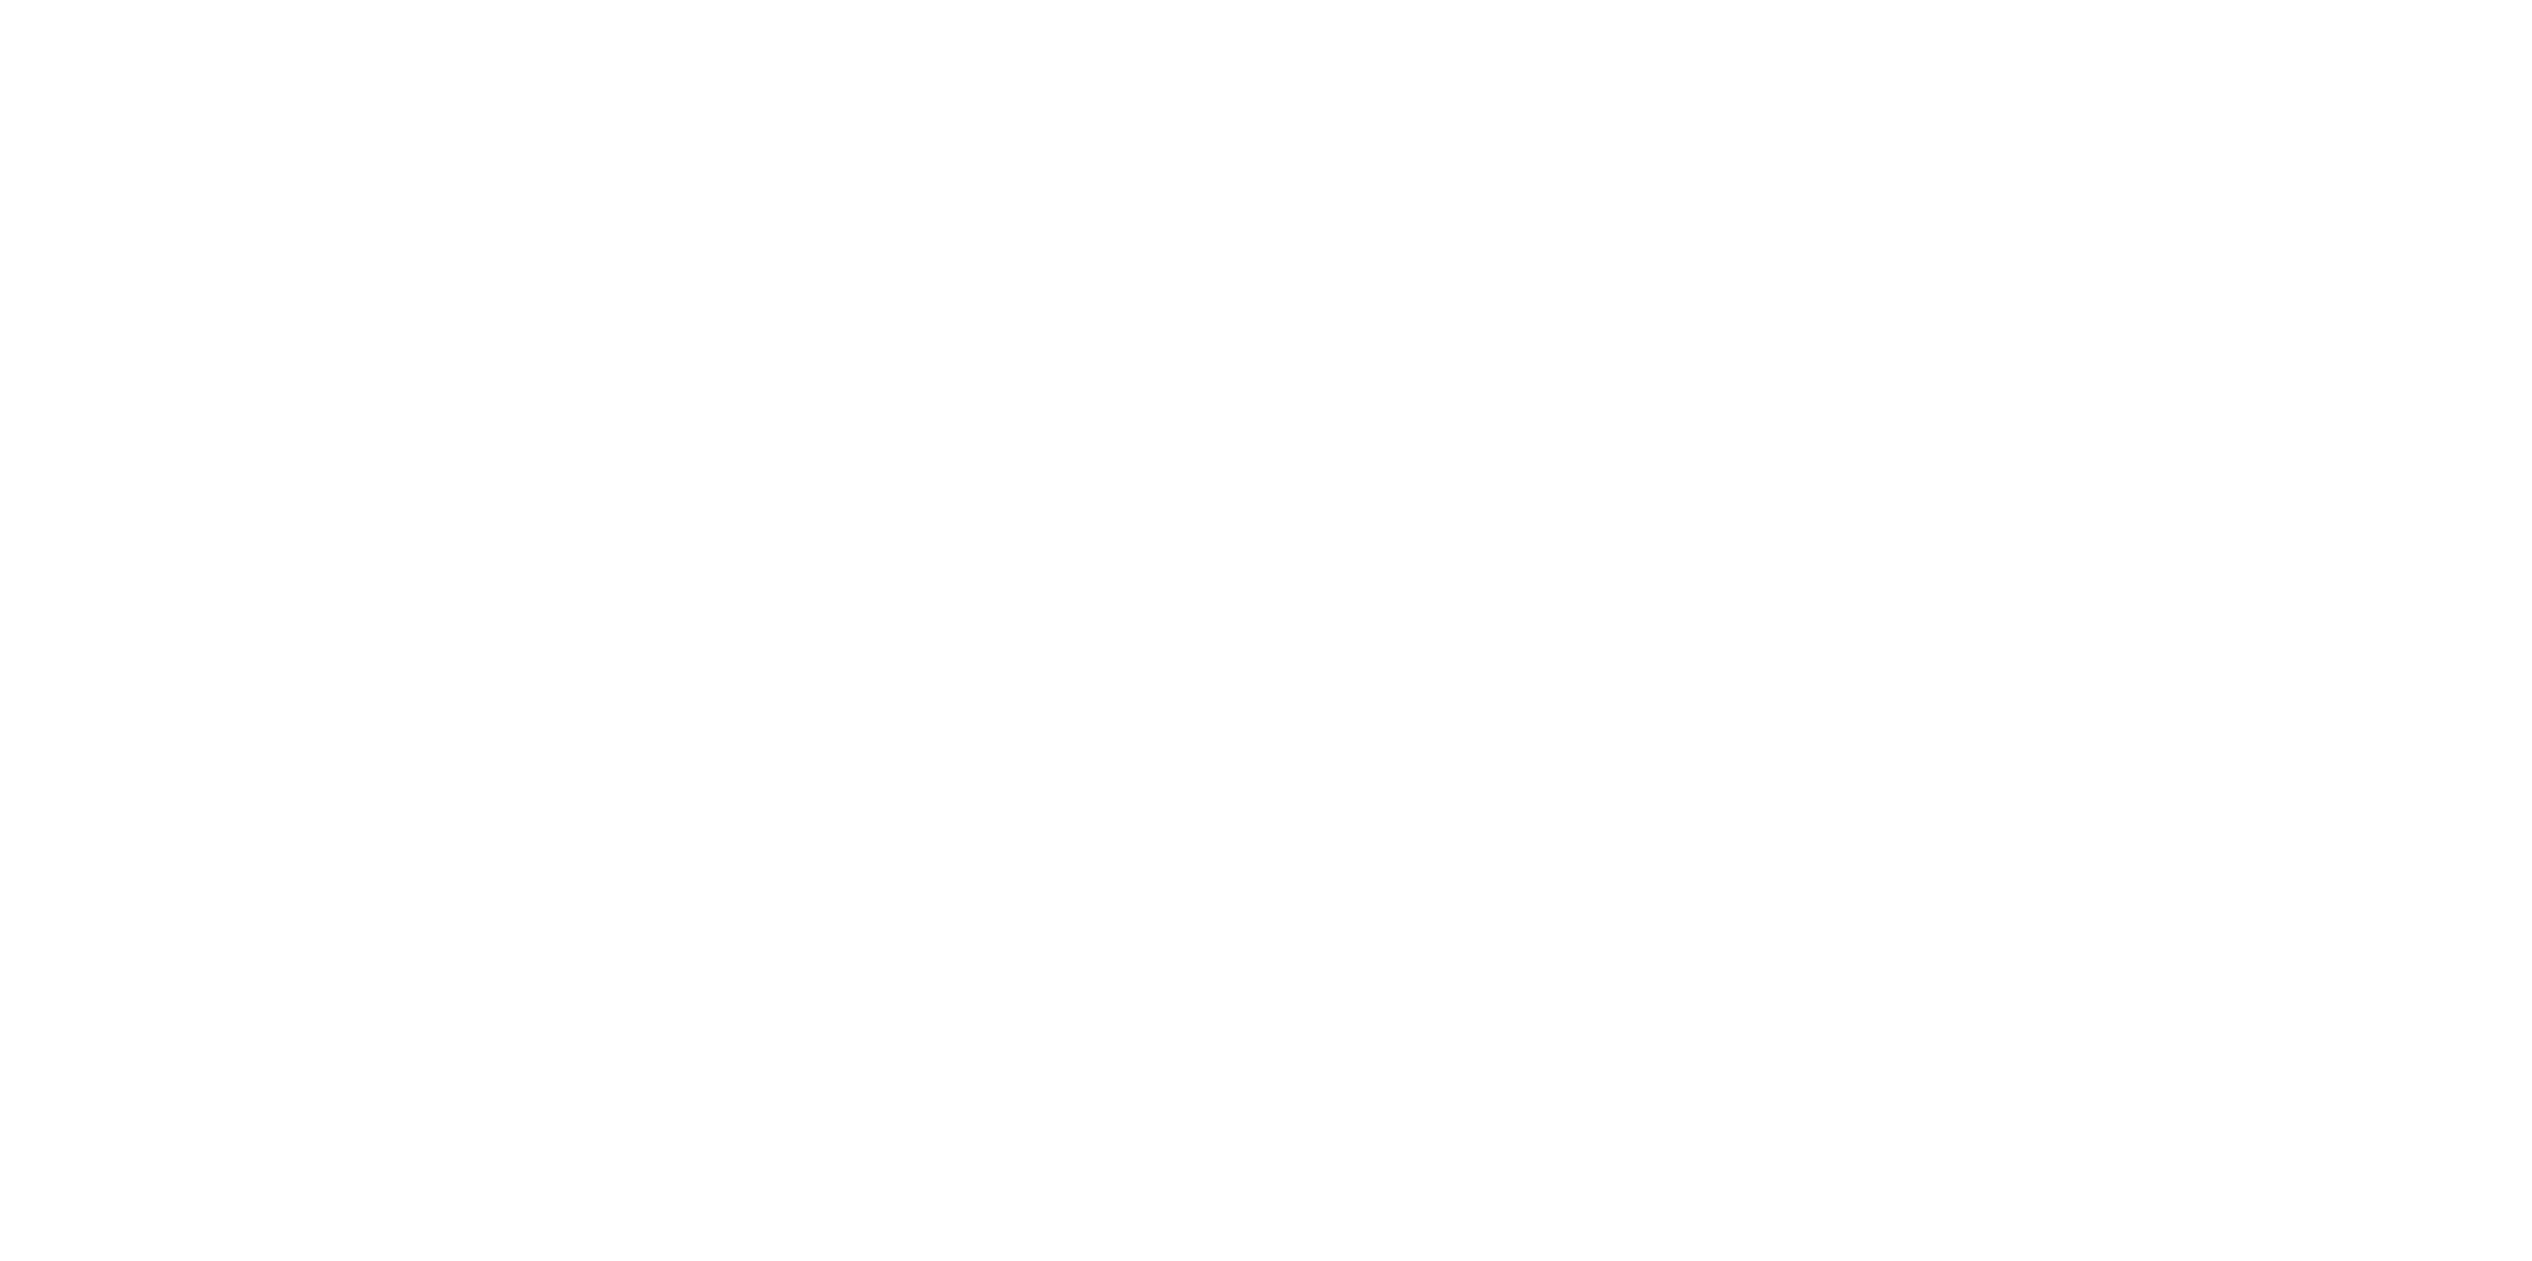 ISBT_Barcelona_2024_white.png 1